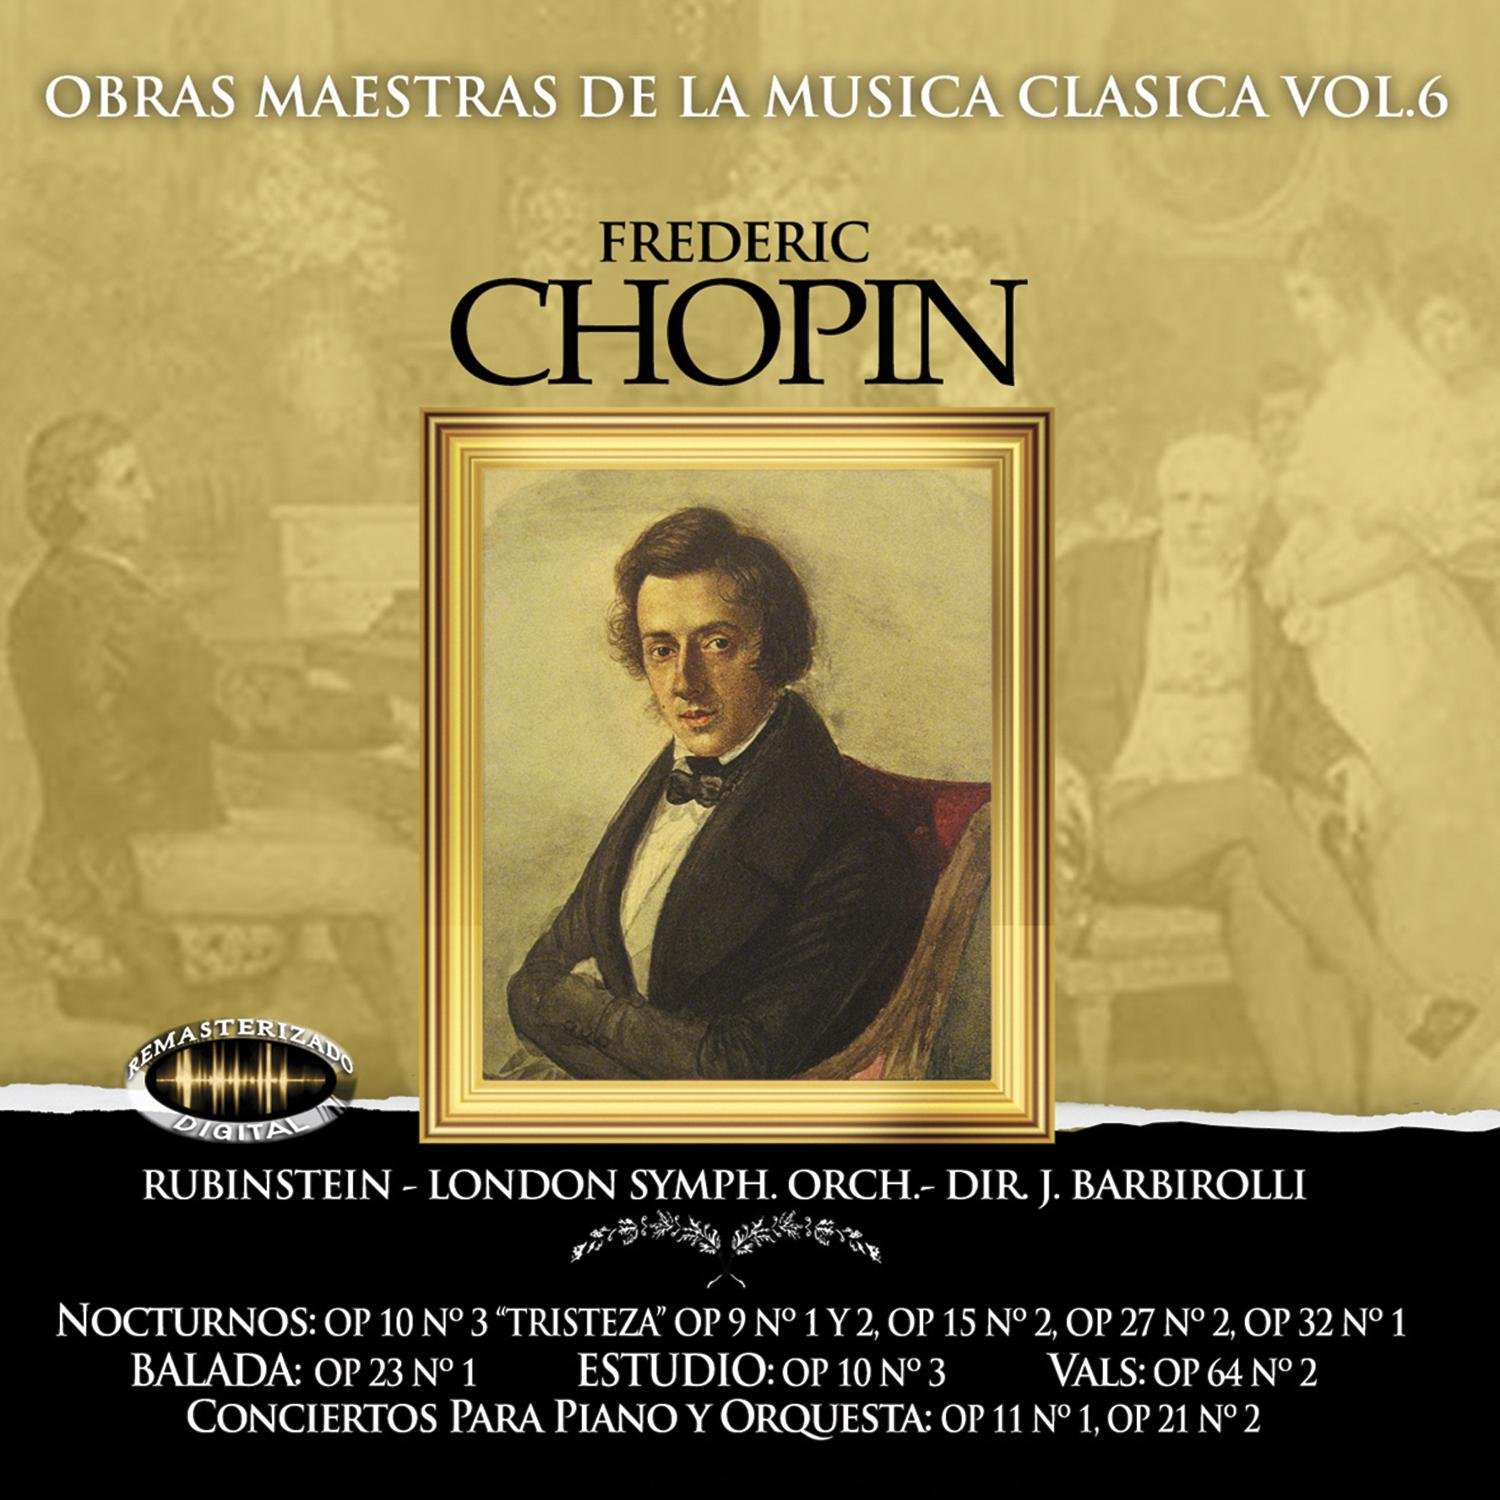 Obras Maestras de la Mu sica Cla sica, Vol. 6  Fre de ric Chopin